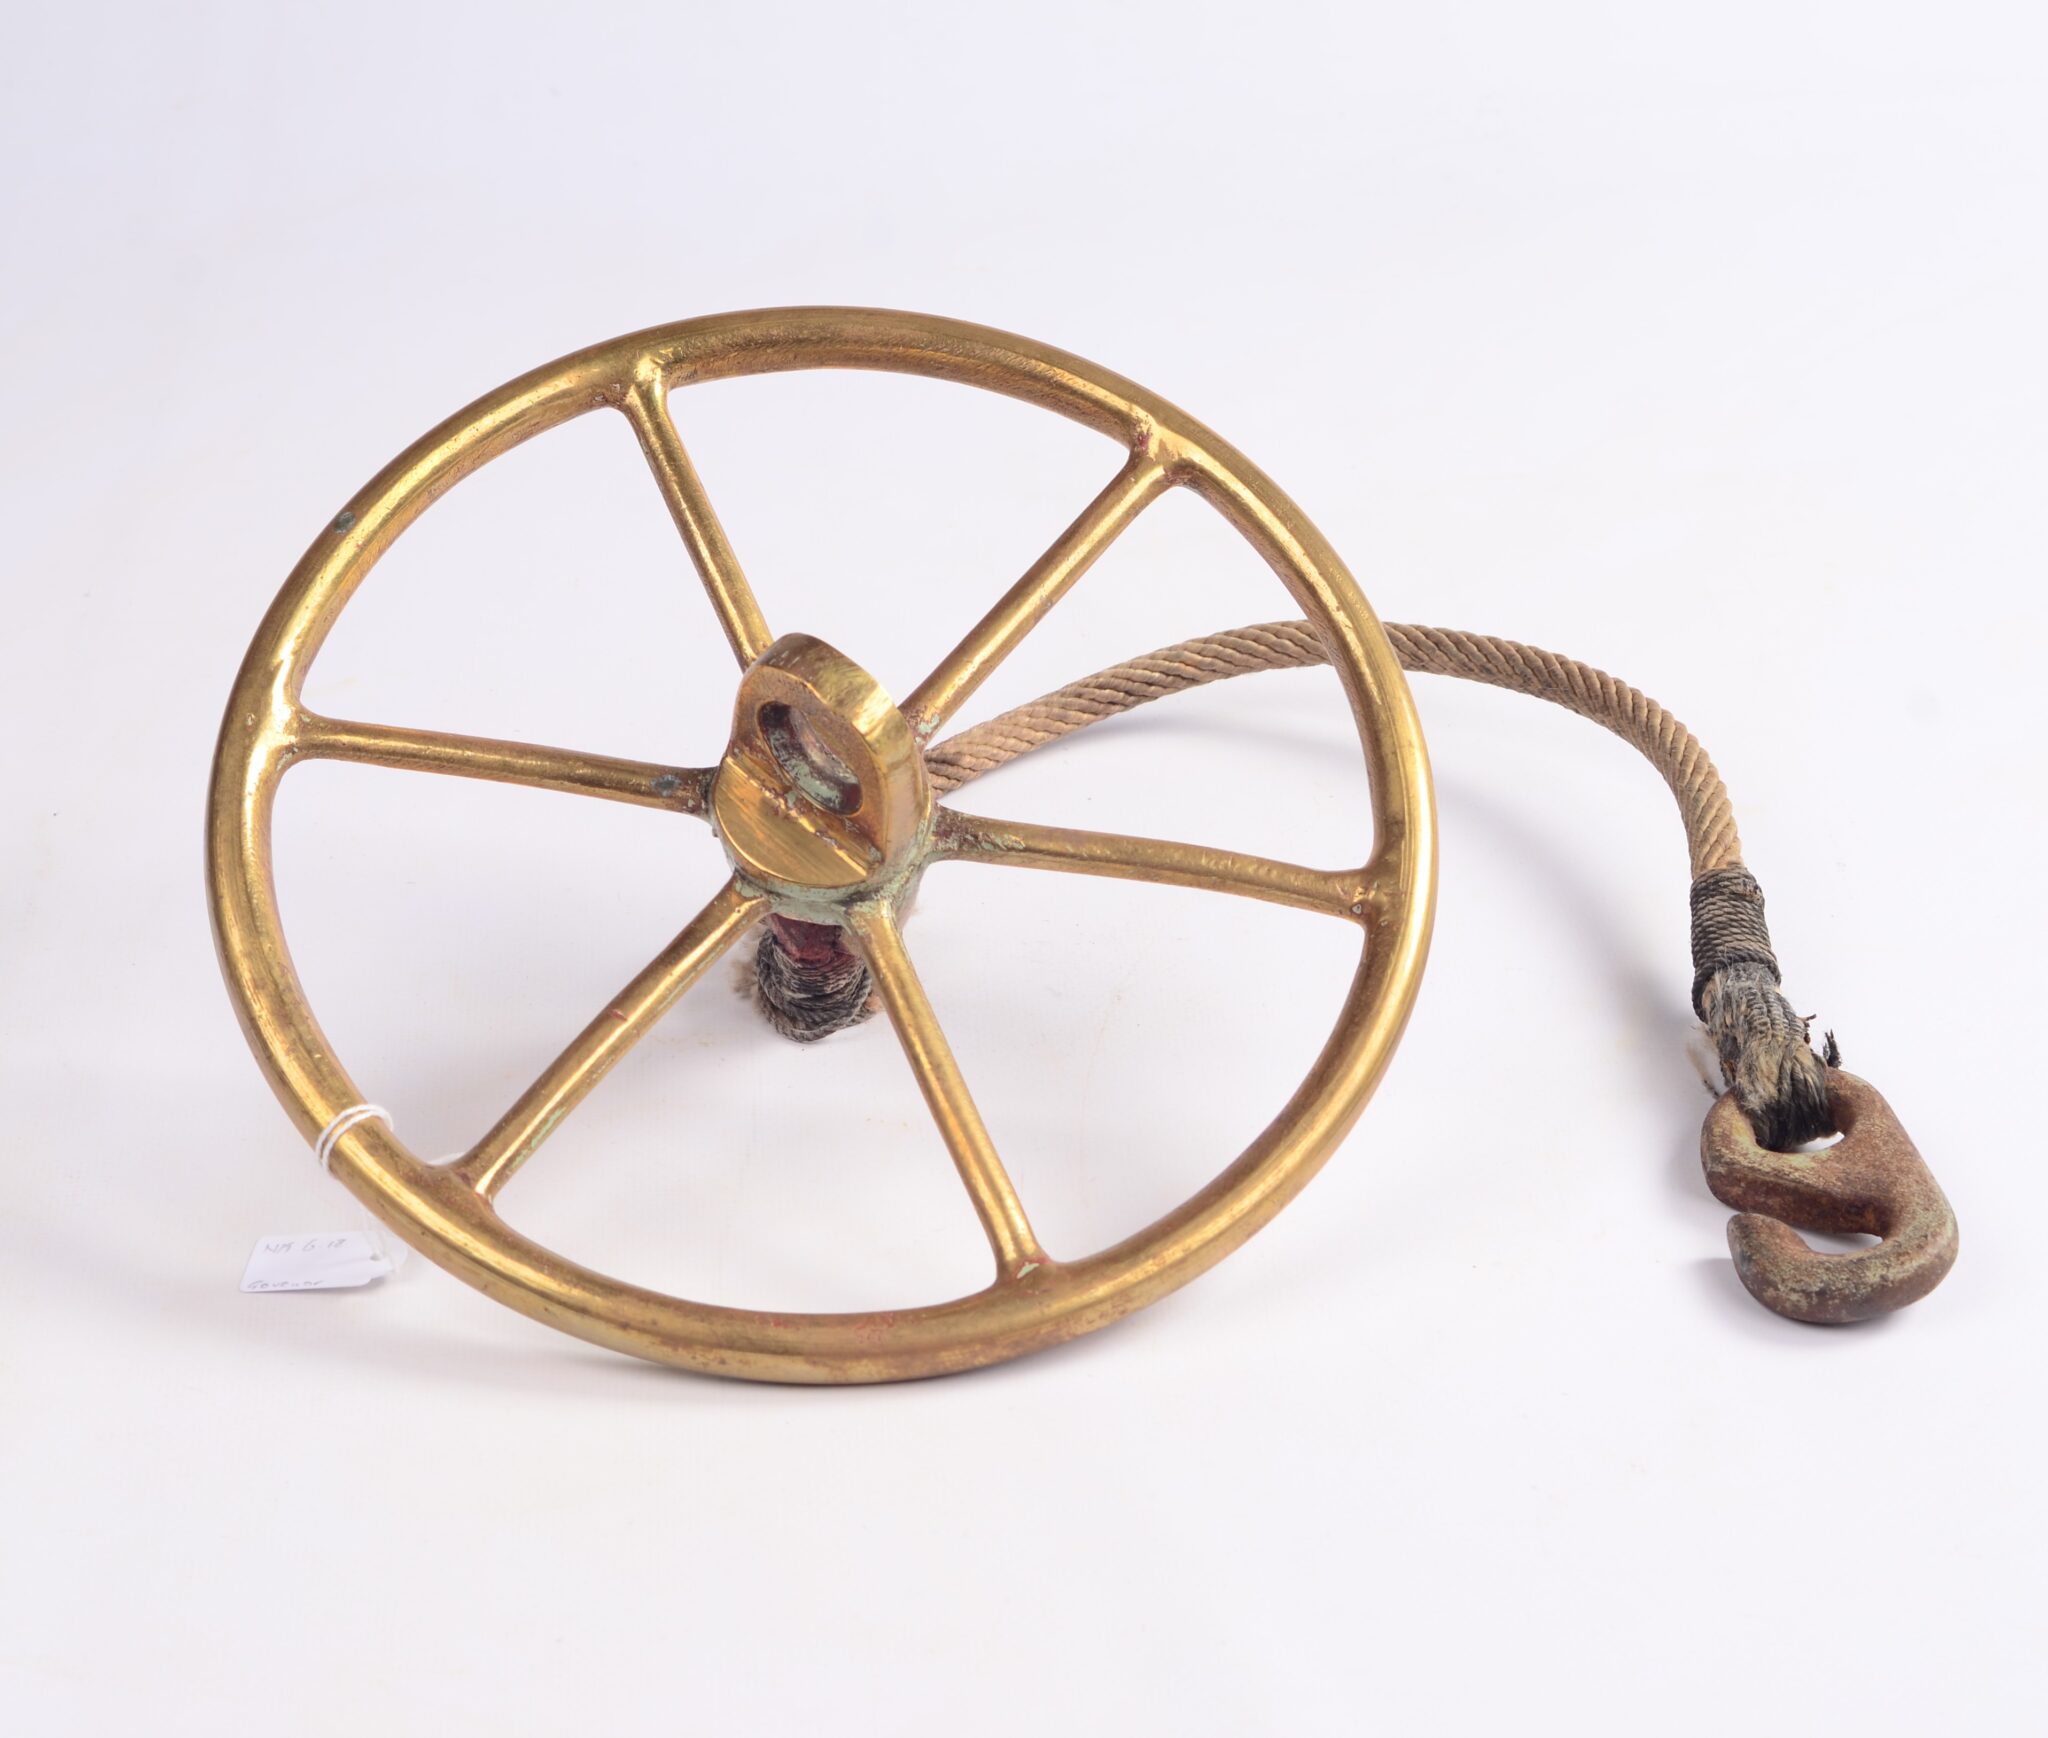 Governor wheel – Fly wheel – Regulator – W. Waring (?), circa 1878